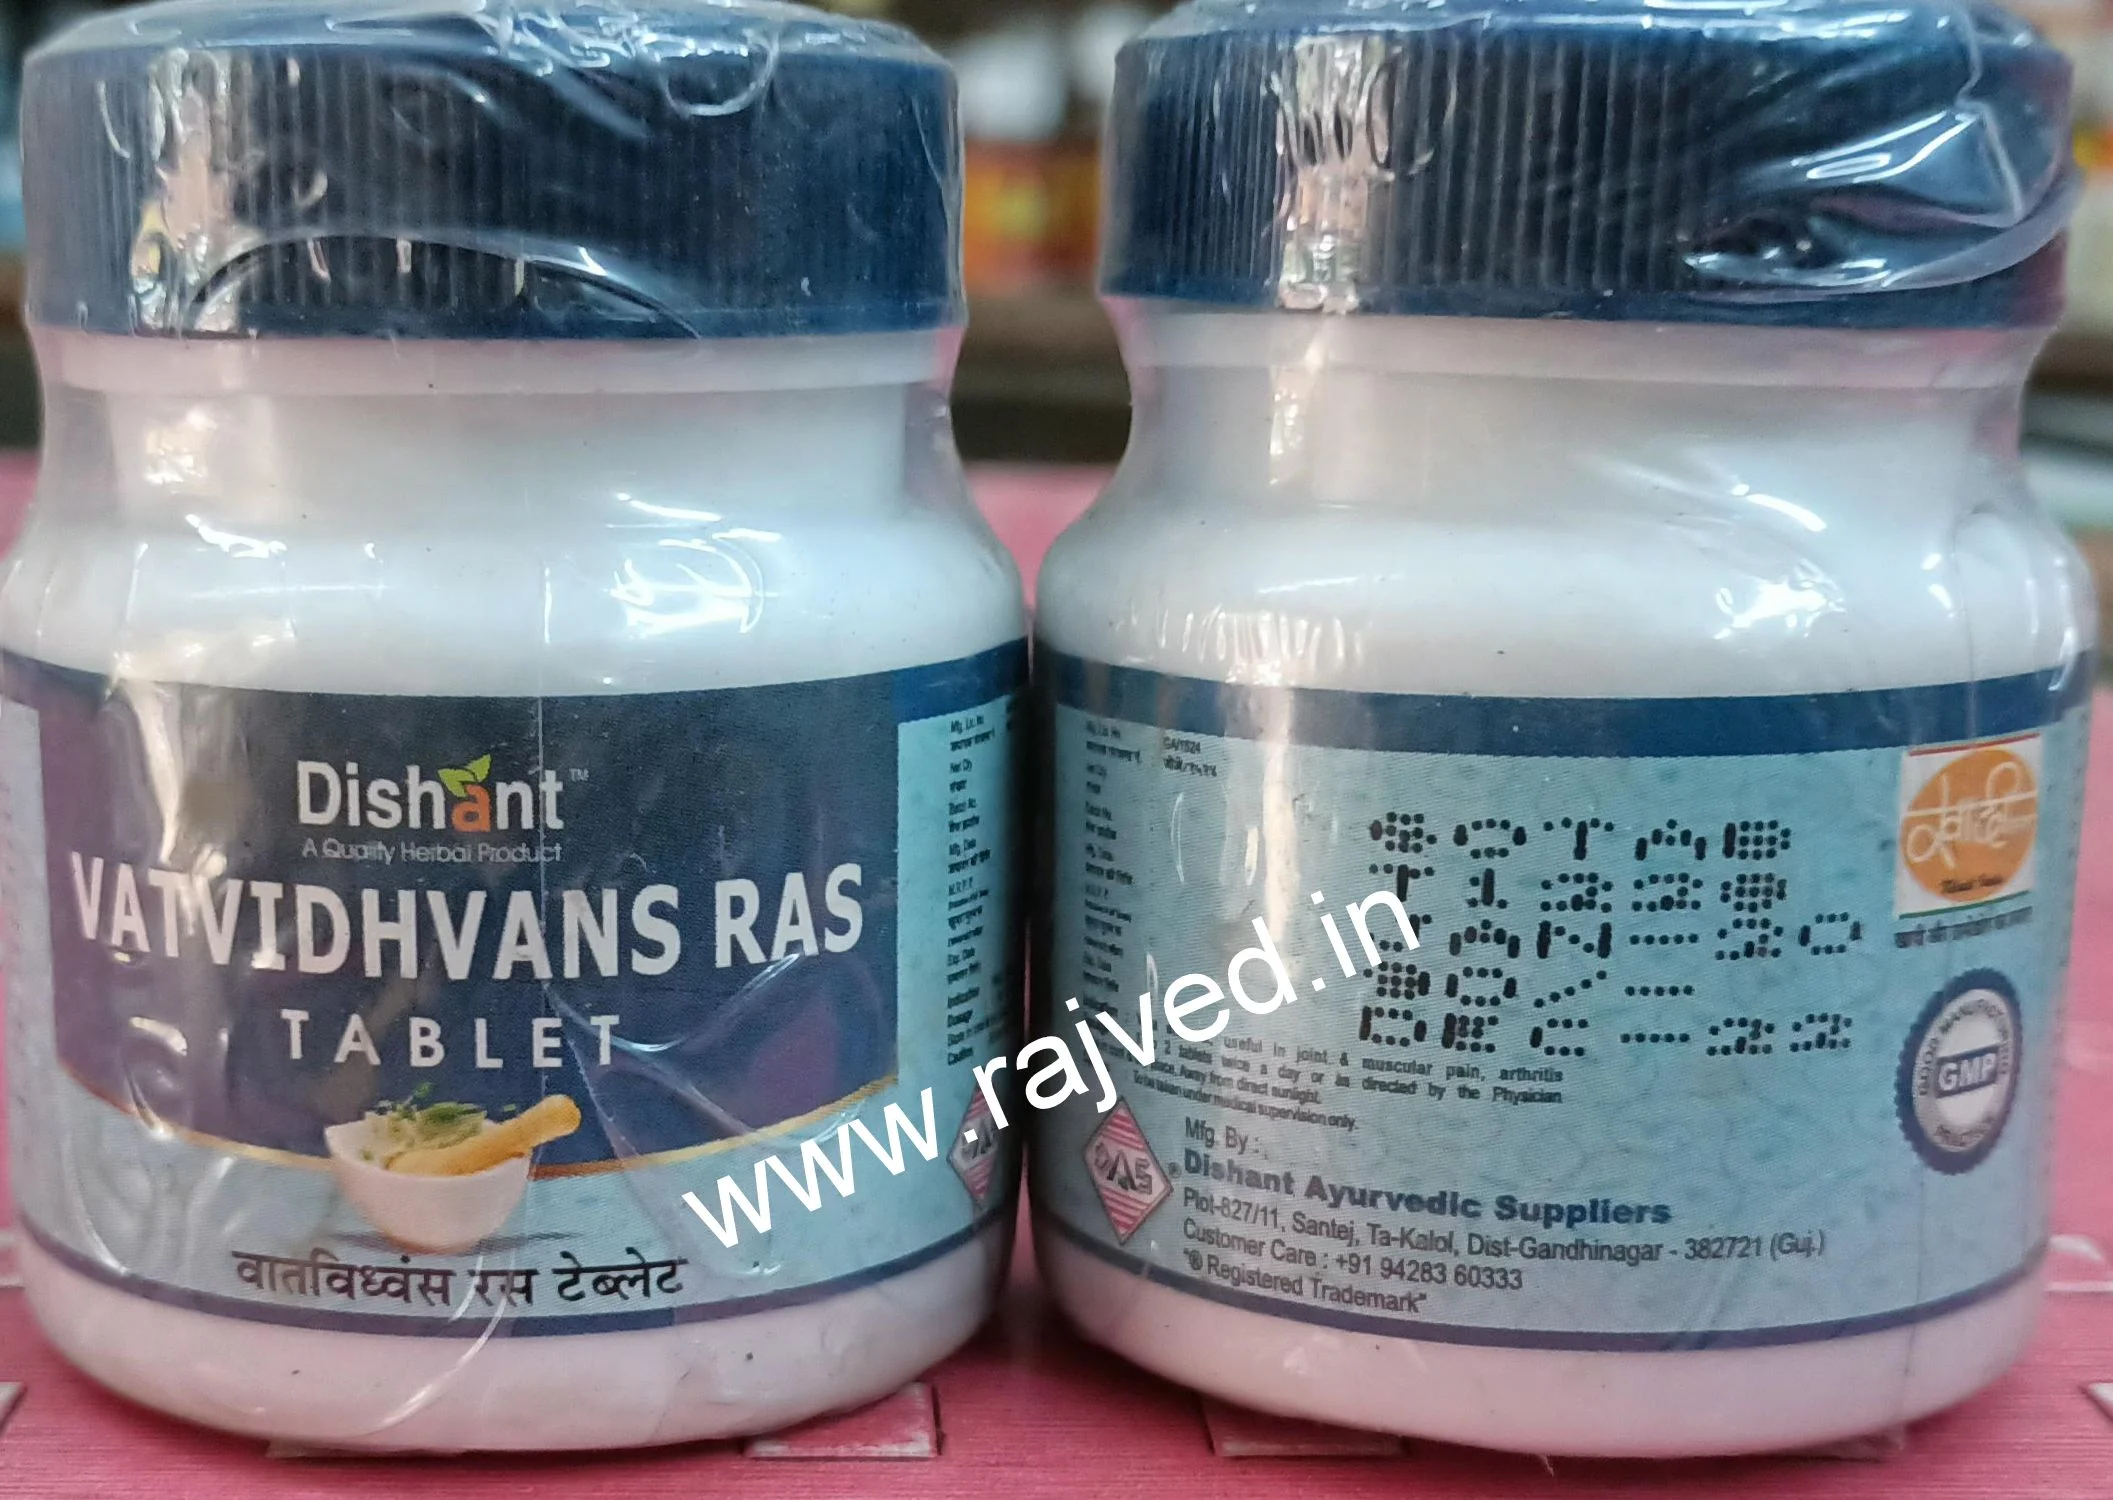 vatvidhvans ras tablets 500 gm upto 20% off dishant ayurvedic suppliers